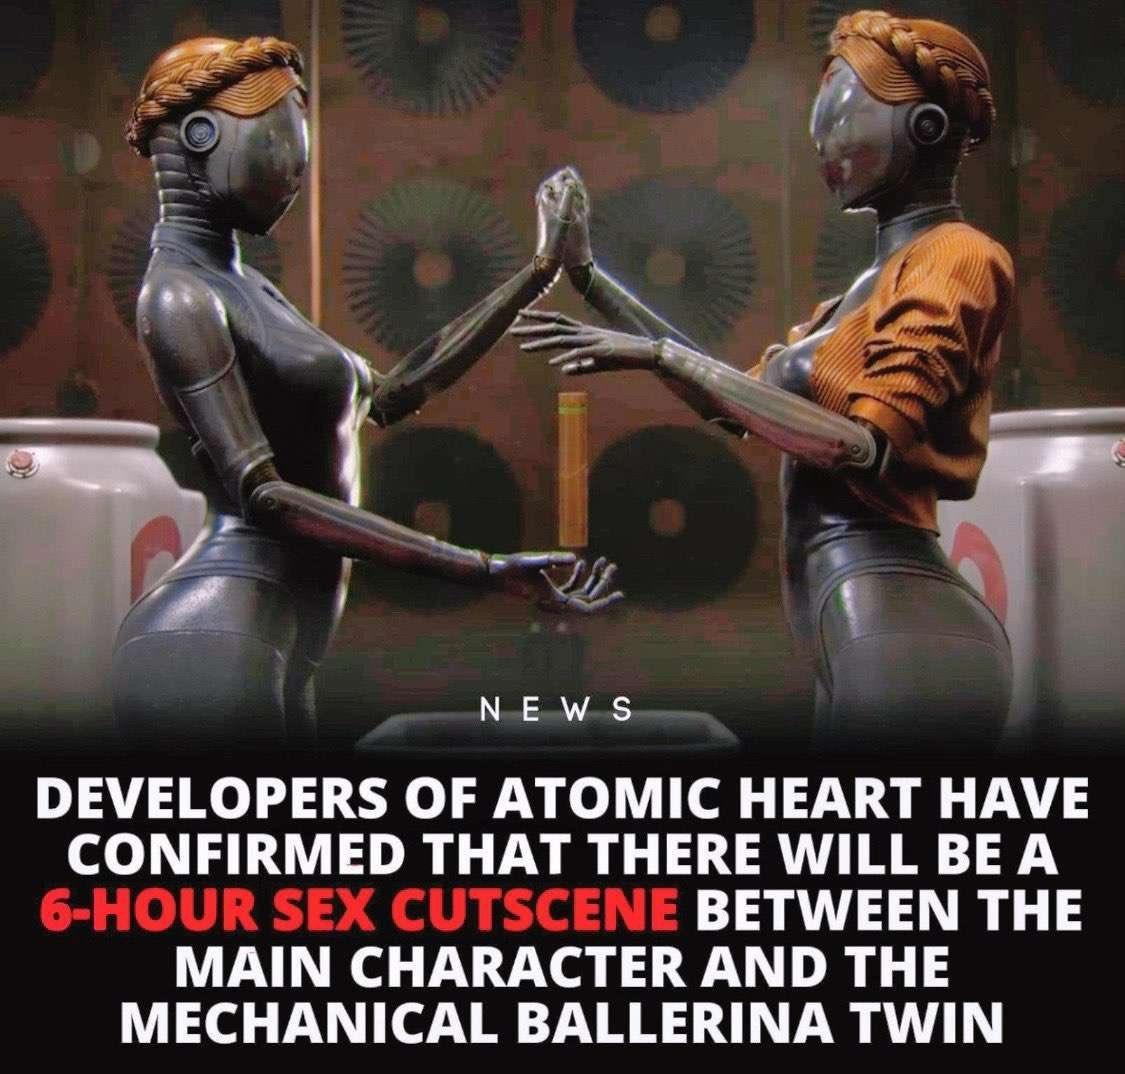 Atomic heart fridge Nora my beloved #atomicheart